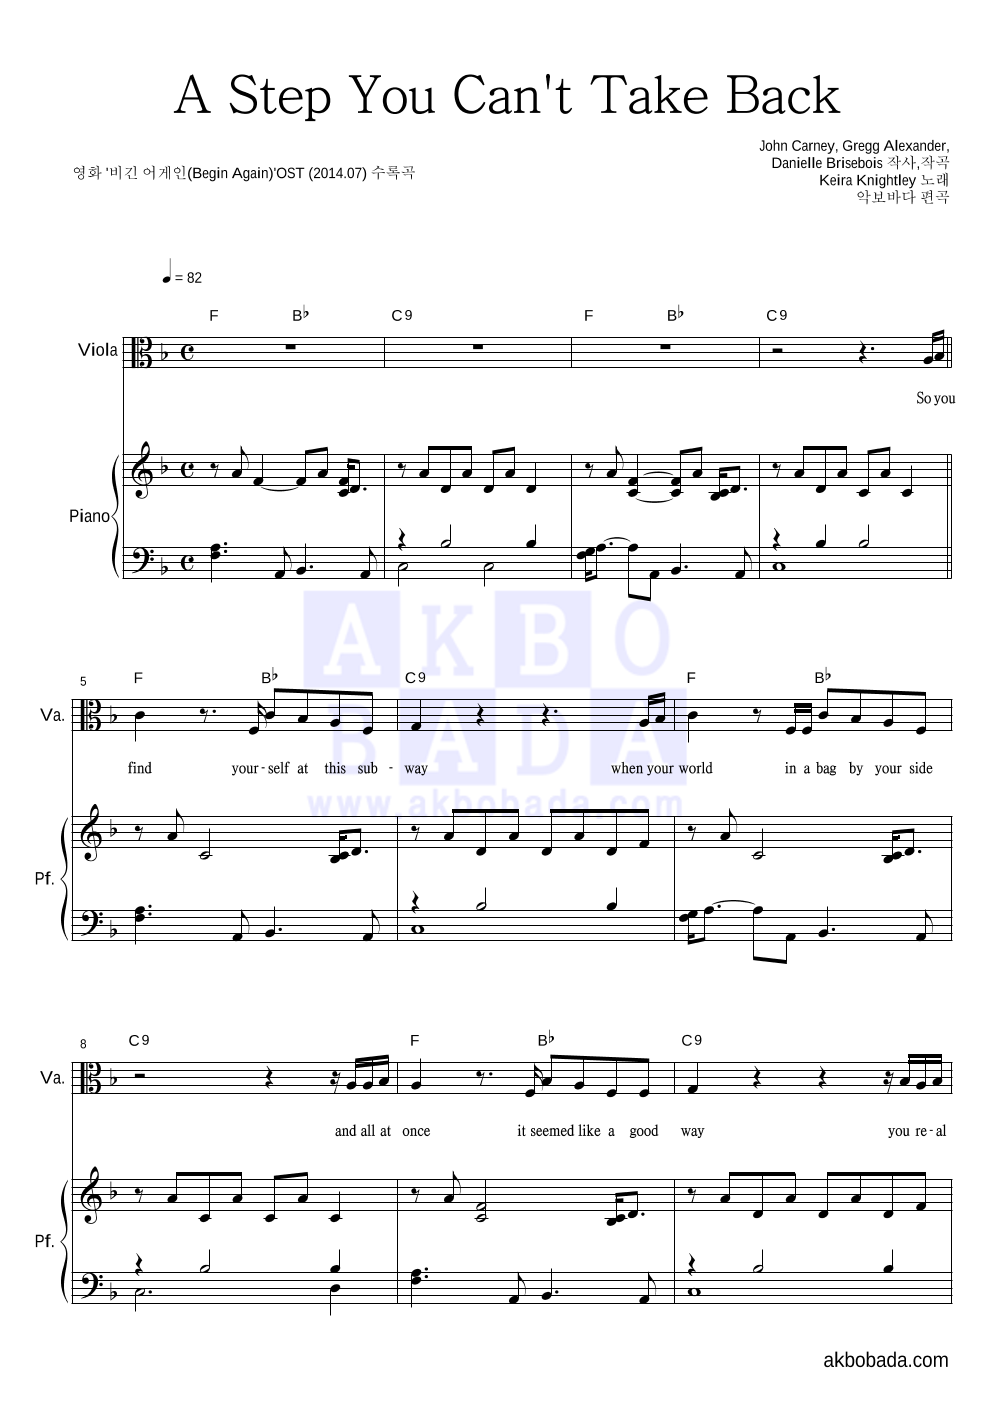 Keira Knightley - A Step You Can't Take Back 비올라&피아노 악보 